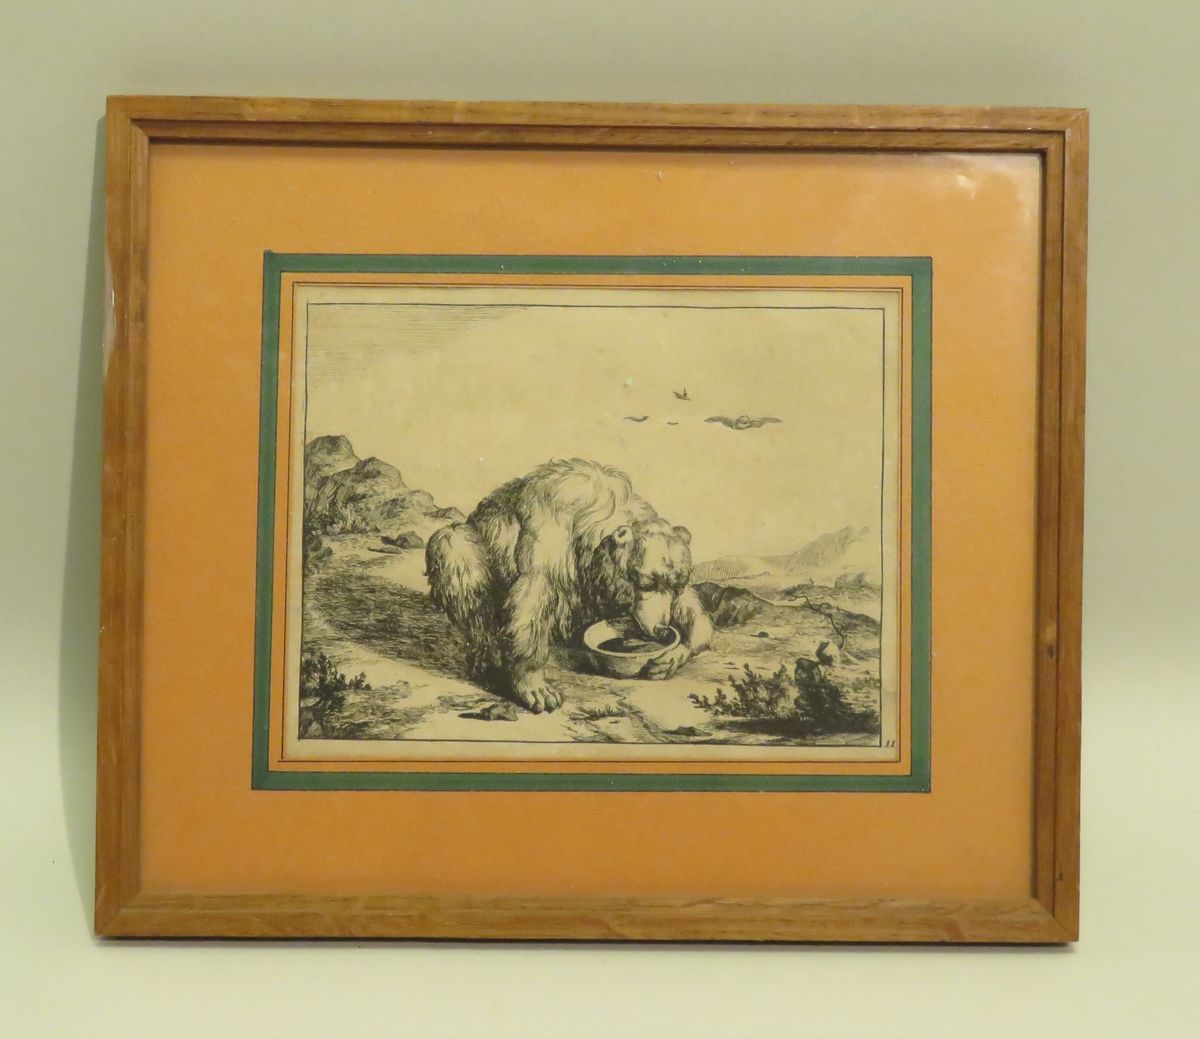 Null 熊。蚀刻版画。11.5 x 14.5厘米(正在观看)。